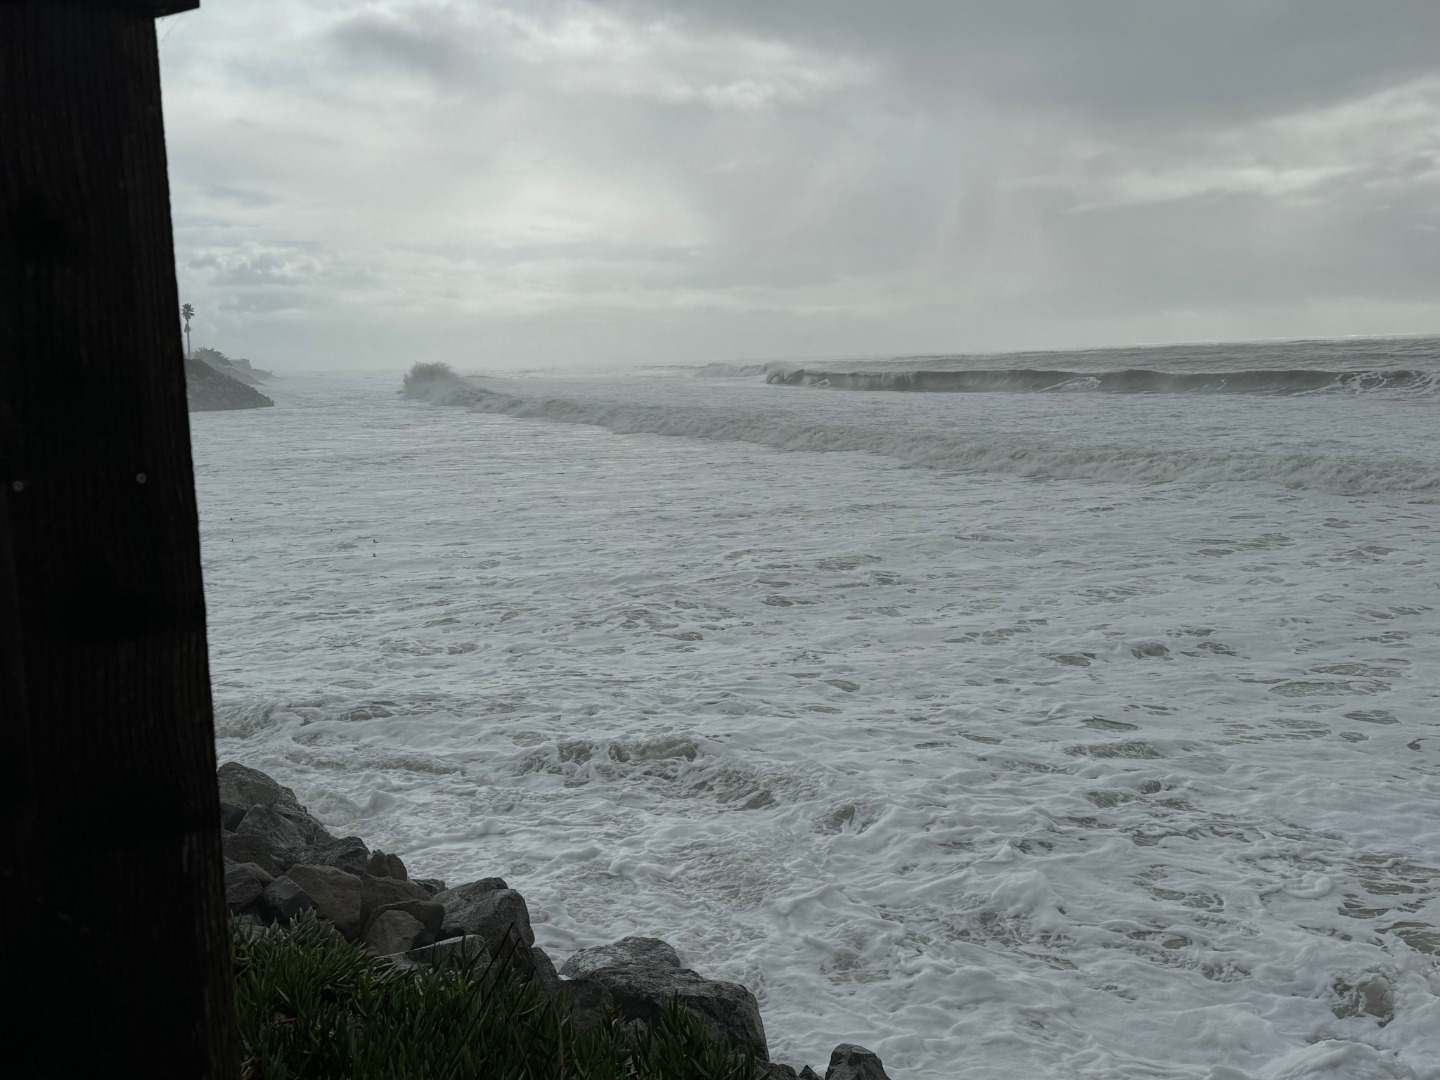 Gigantic swells poured through the California coastline this week